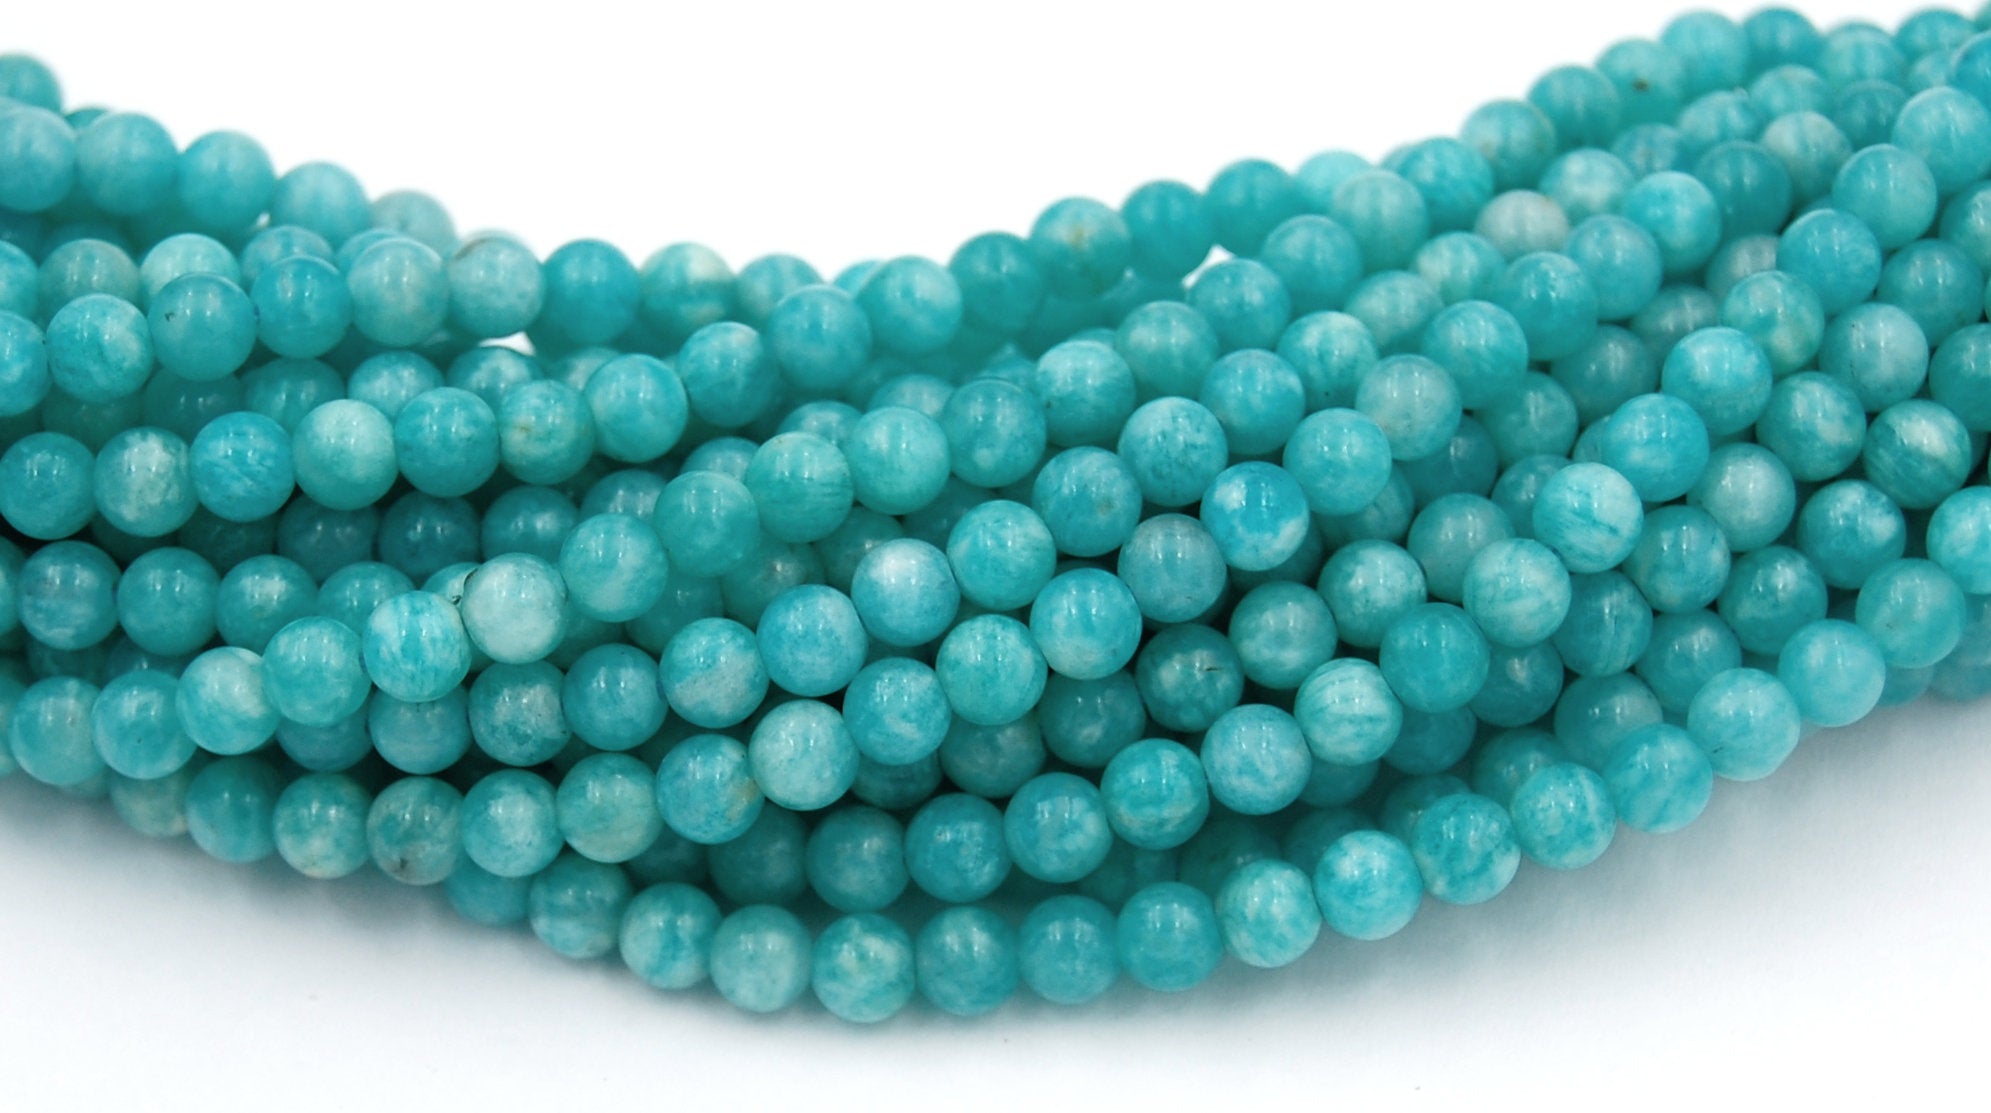 4mm Brazil Amazonite Round Beads in Ocean Blue-Green -15 inch strand